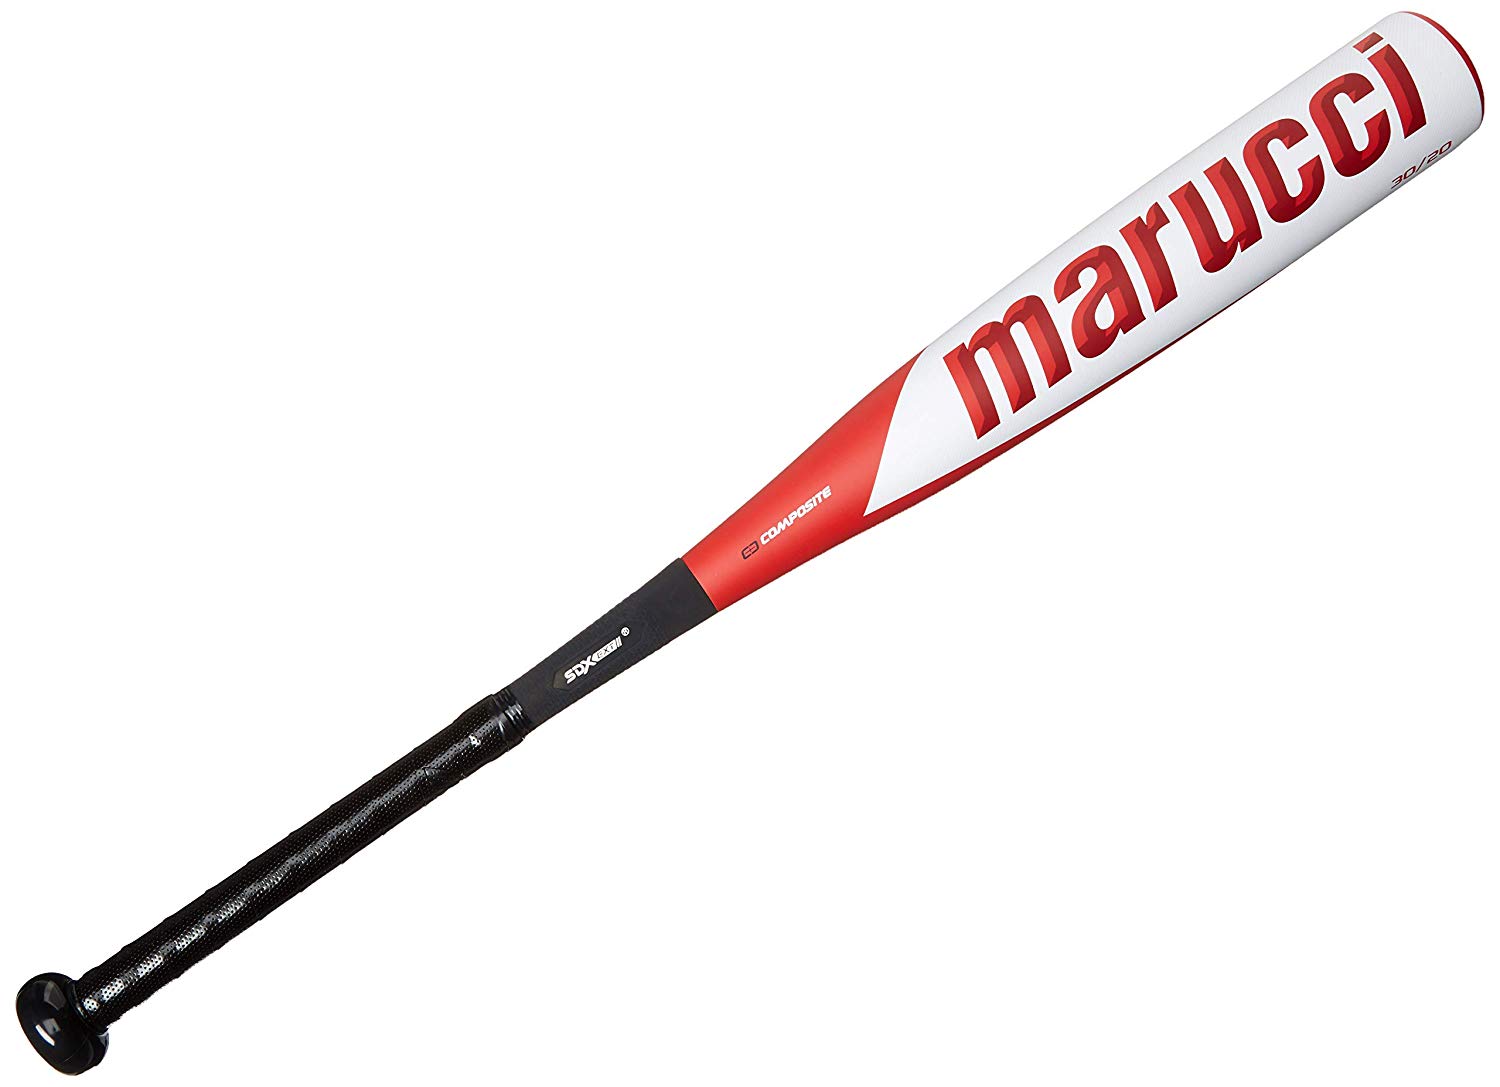 marucci-cat-composite-senior-league-baseball-bat-10-msbccp10-30-inch-20-oz MSBCCP10-3020 Marucci 849817068137 The CAT Composite -10 is a USSSA certified two-piece composite bat